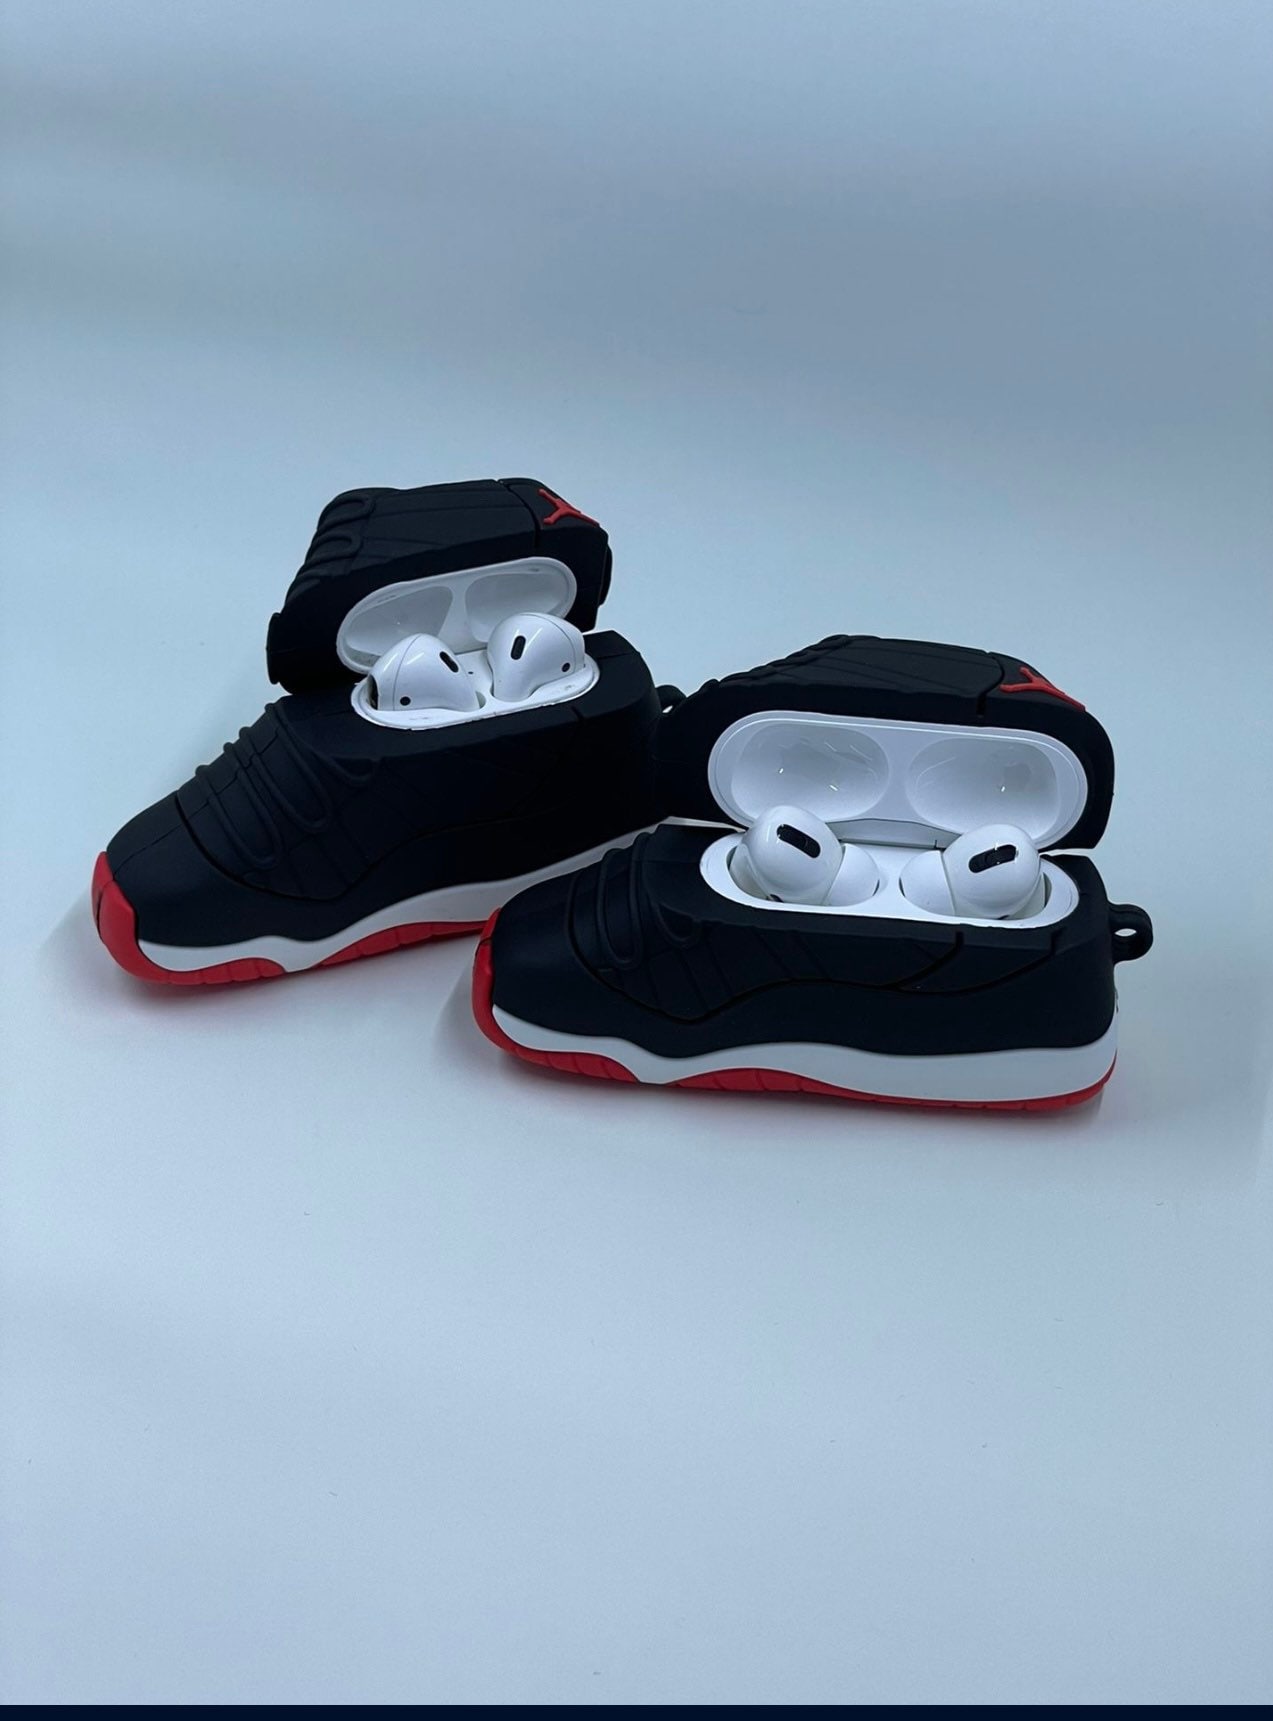 AirPods Case Sneaker Inspired ZC008 – ZatoCase